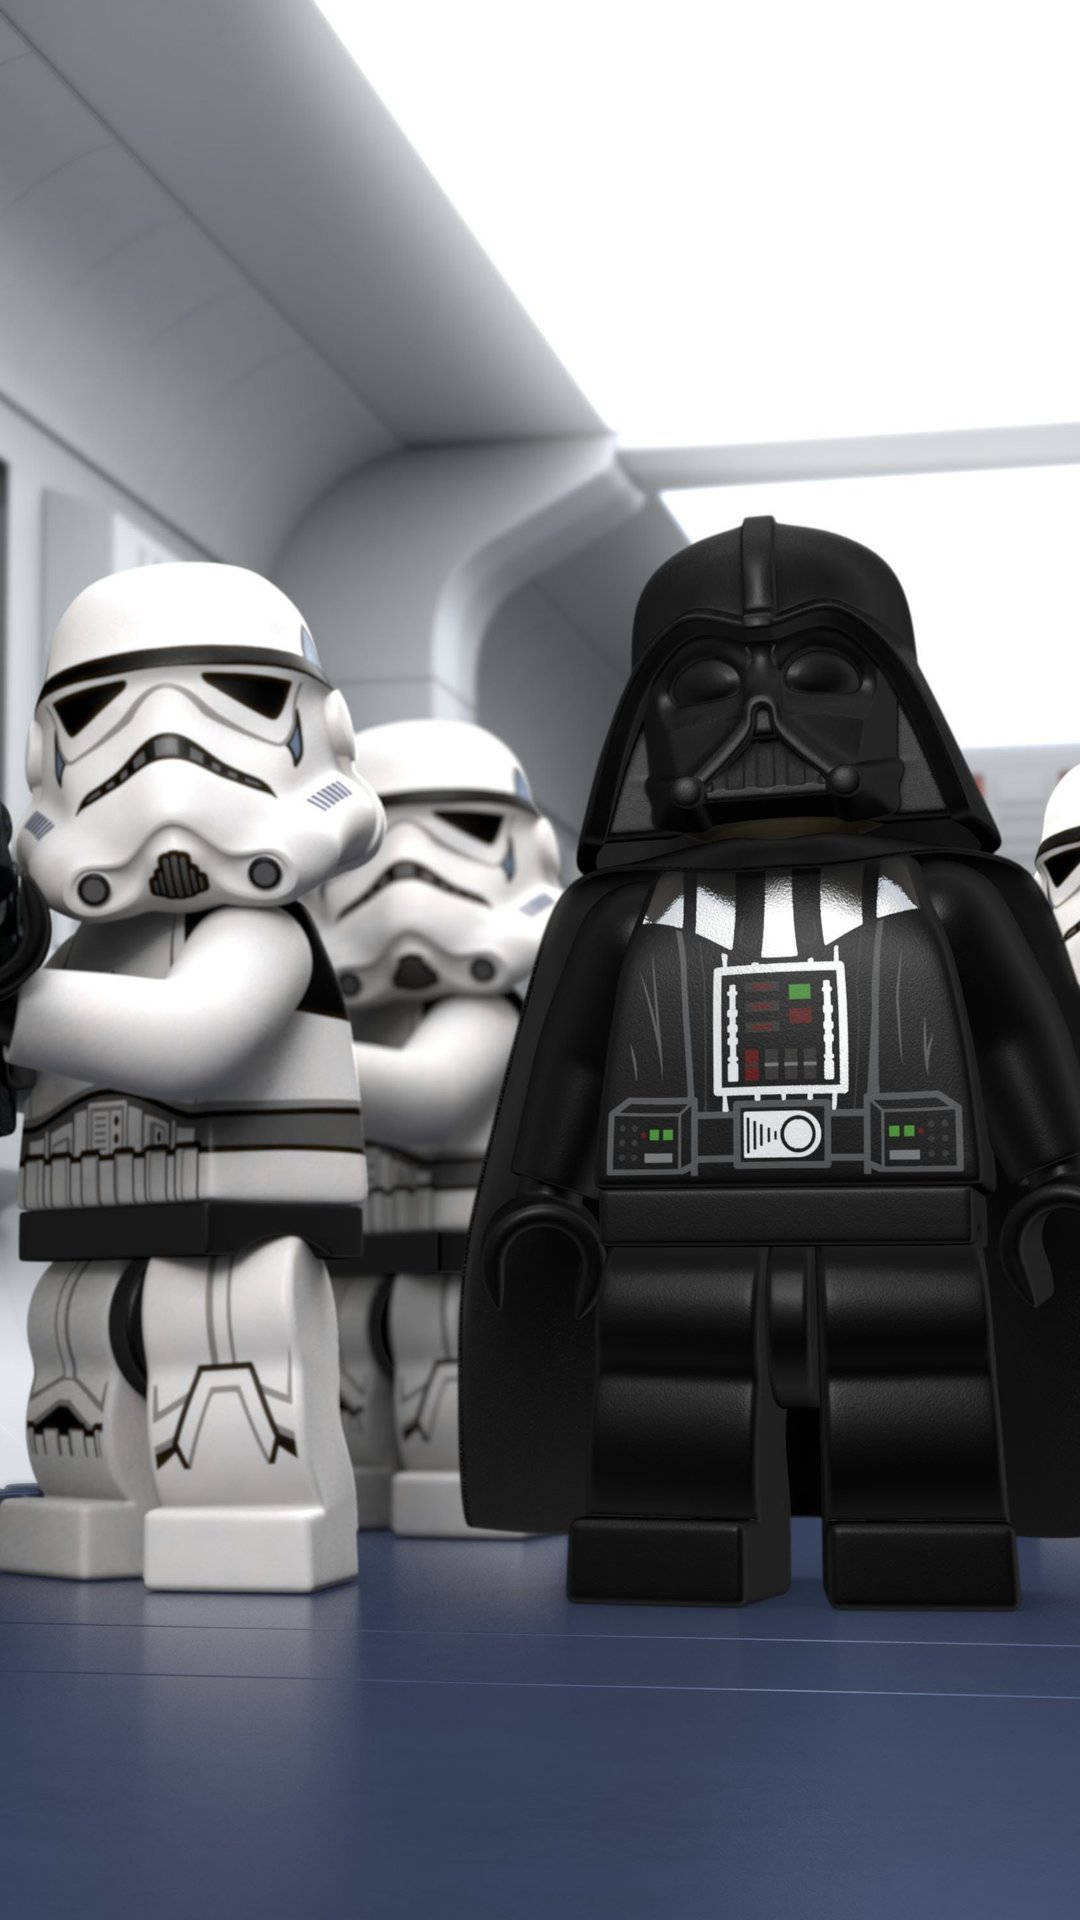 Lego Star Wars Stormtroopers Asssisting Darth Vader Wallpaper